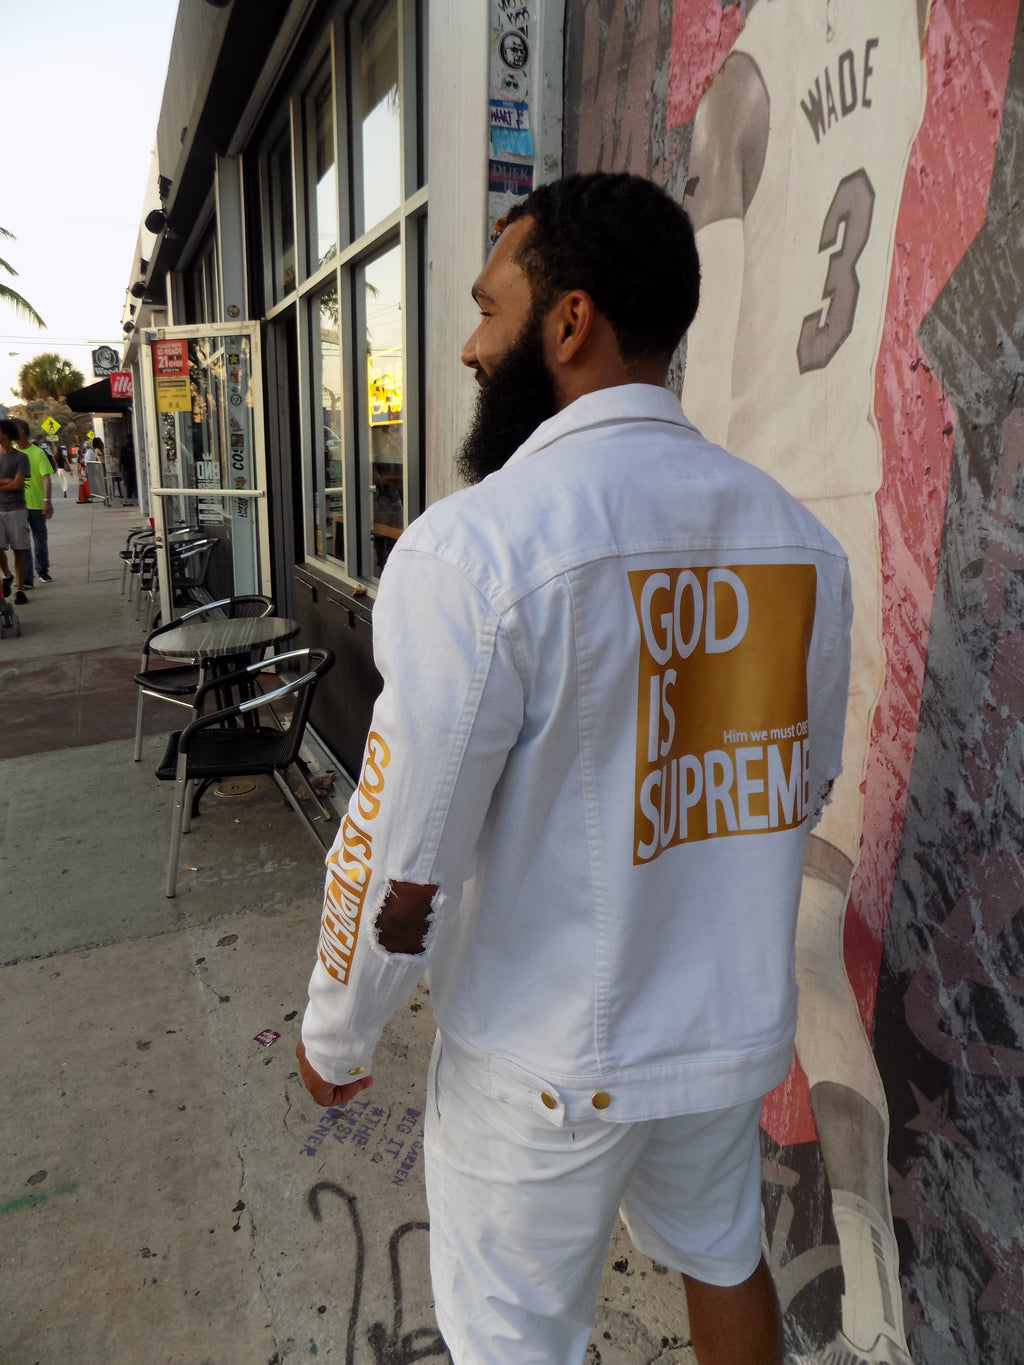 God is Supreme Gold Edition White Denim Jacket (Special Edition) - God Is Supreme 